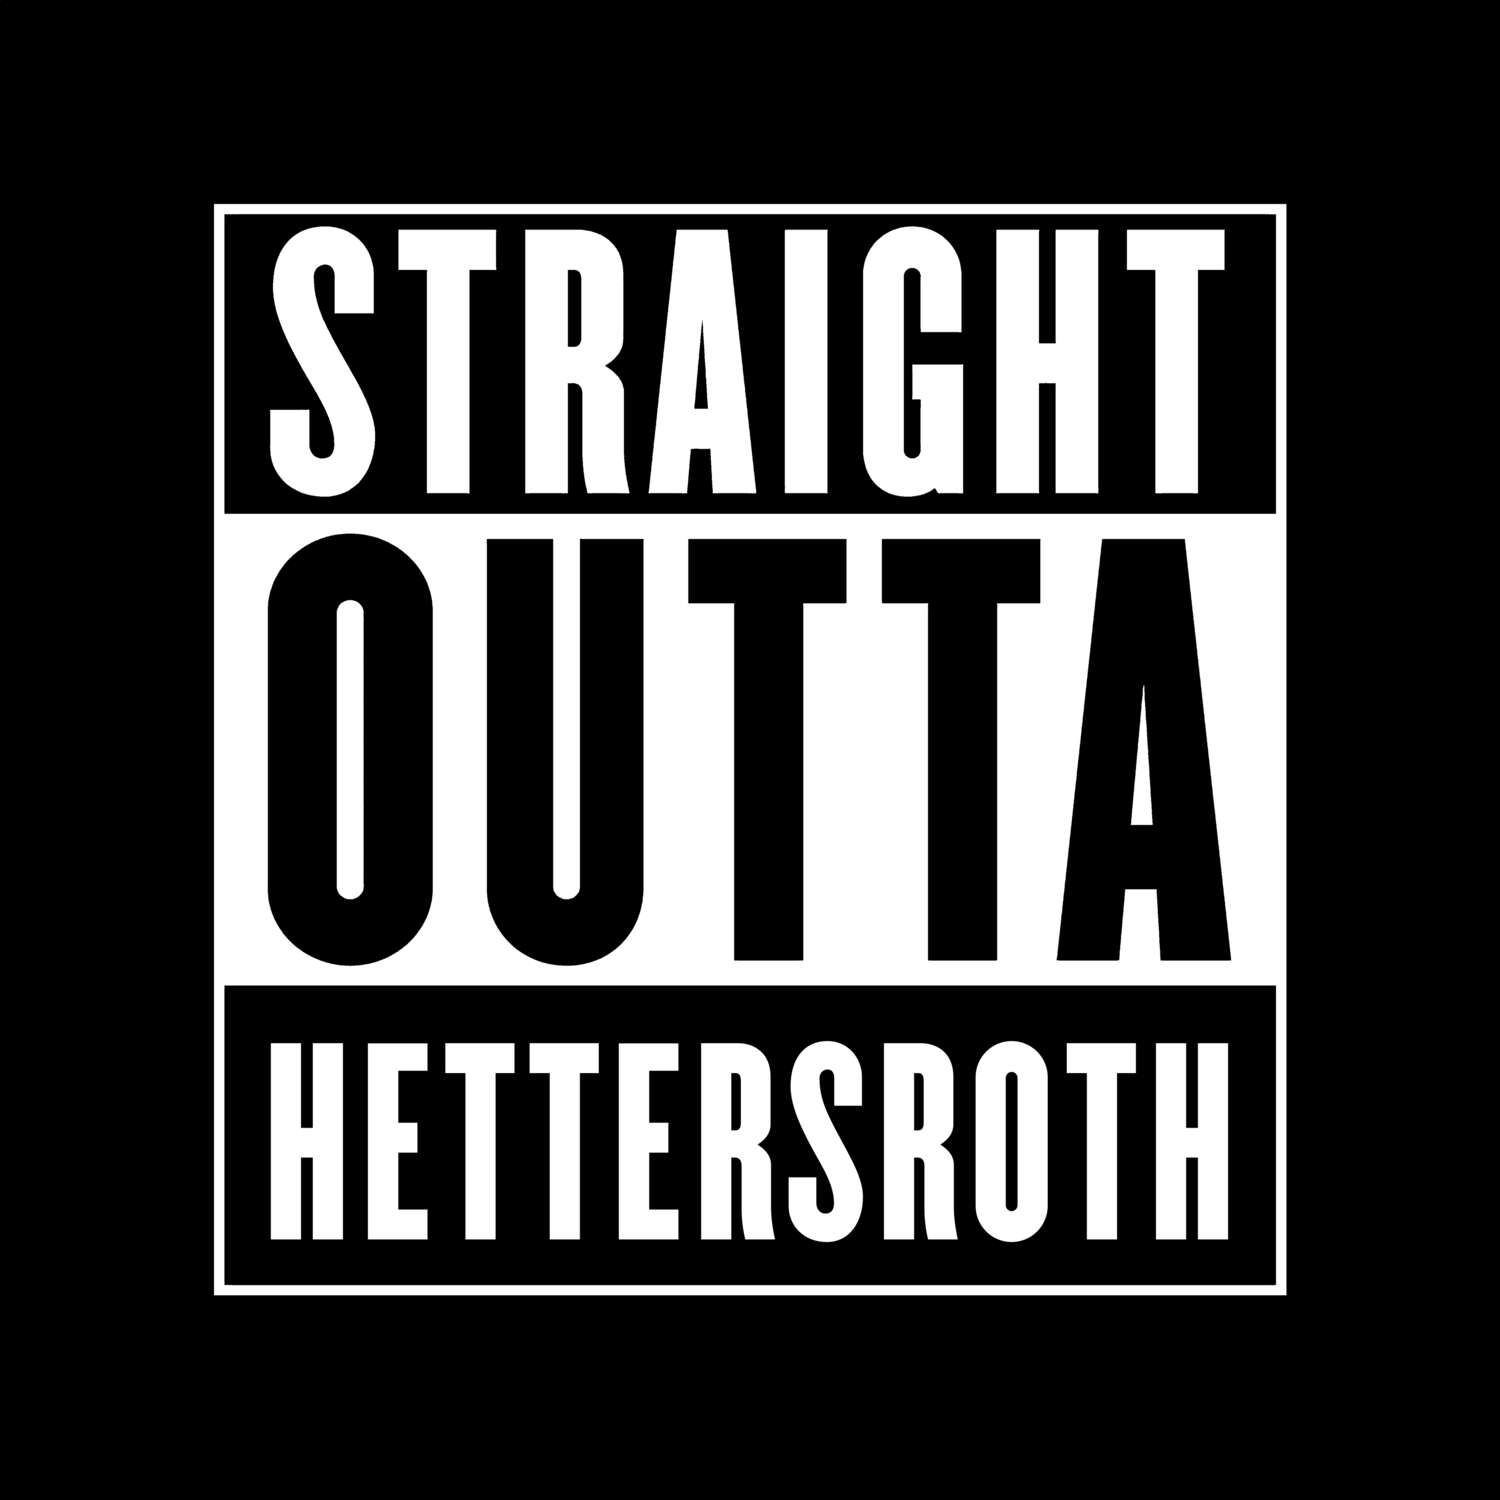 Hettersroth T-Shirt »Straight Outta«